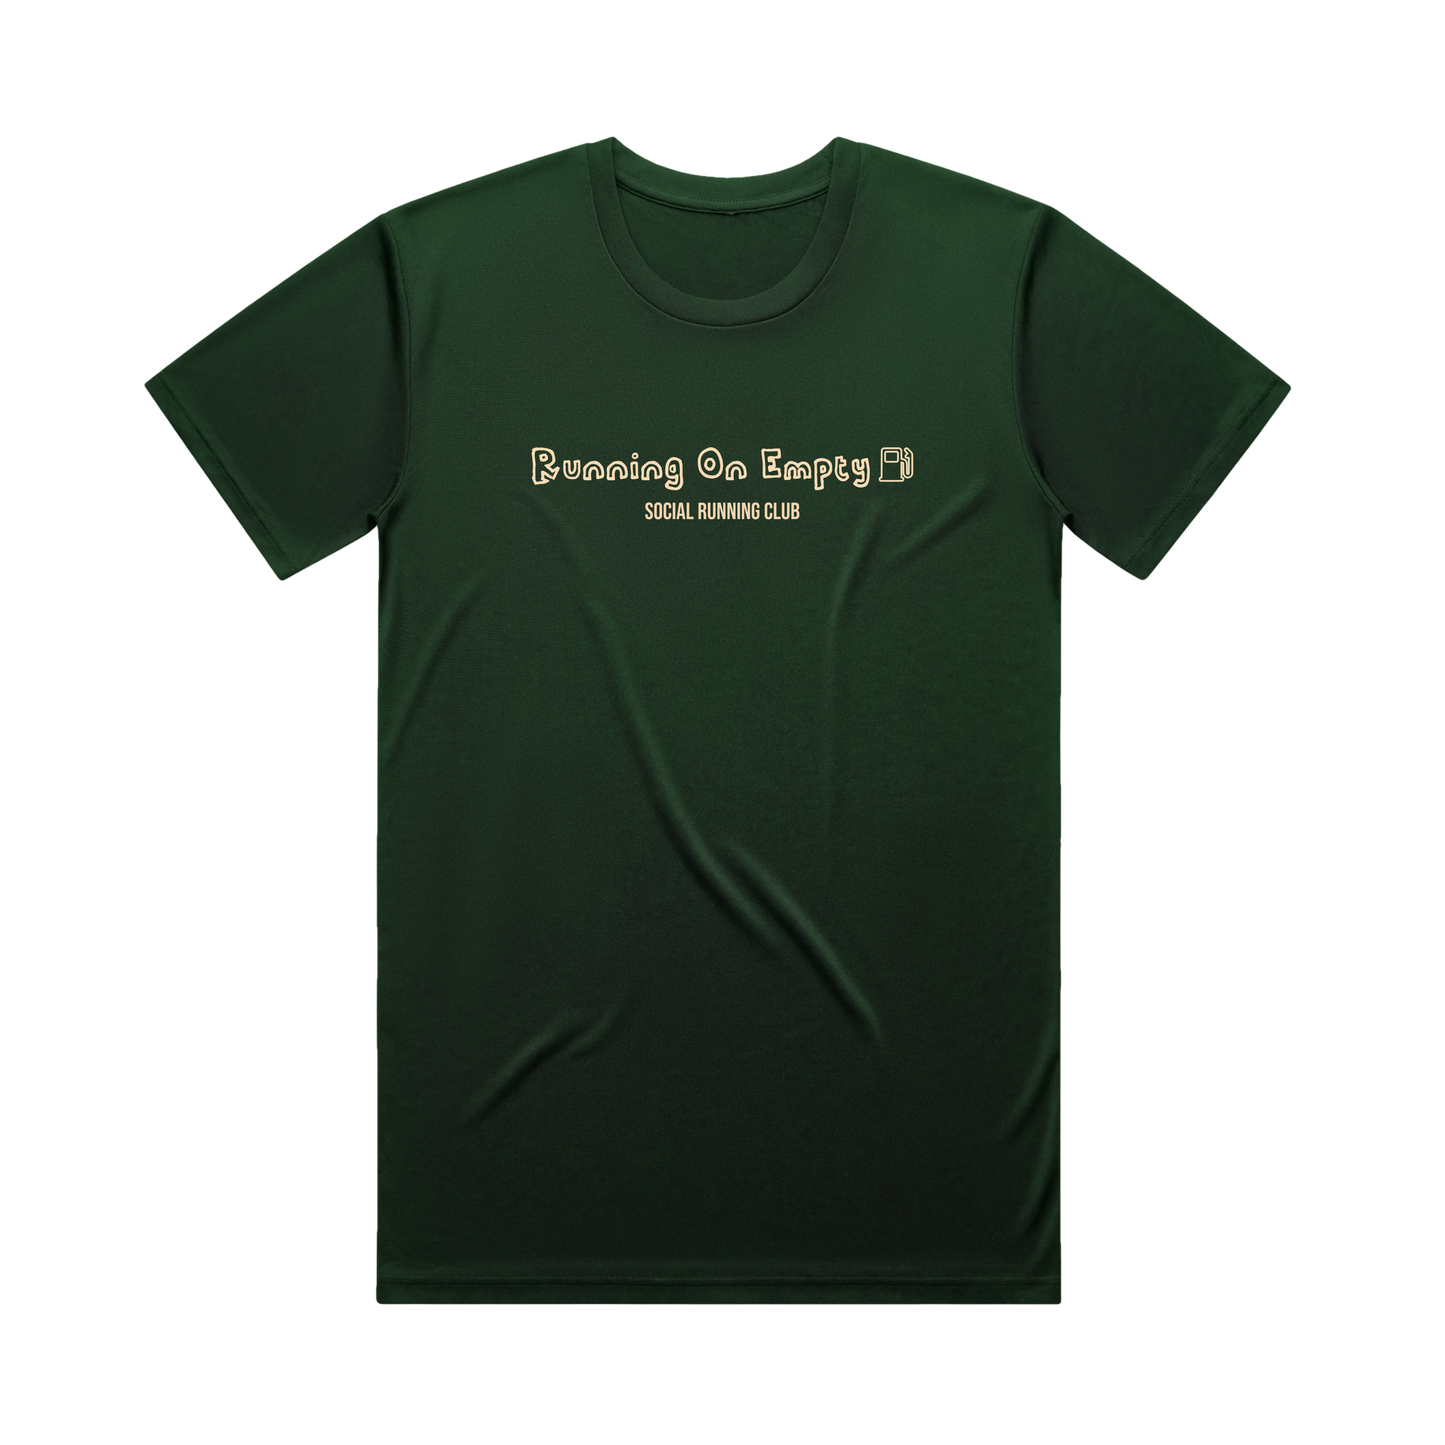 Green Running On Empty Performance T-Shirt